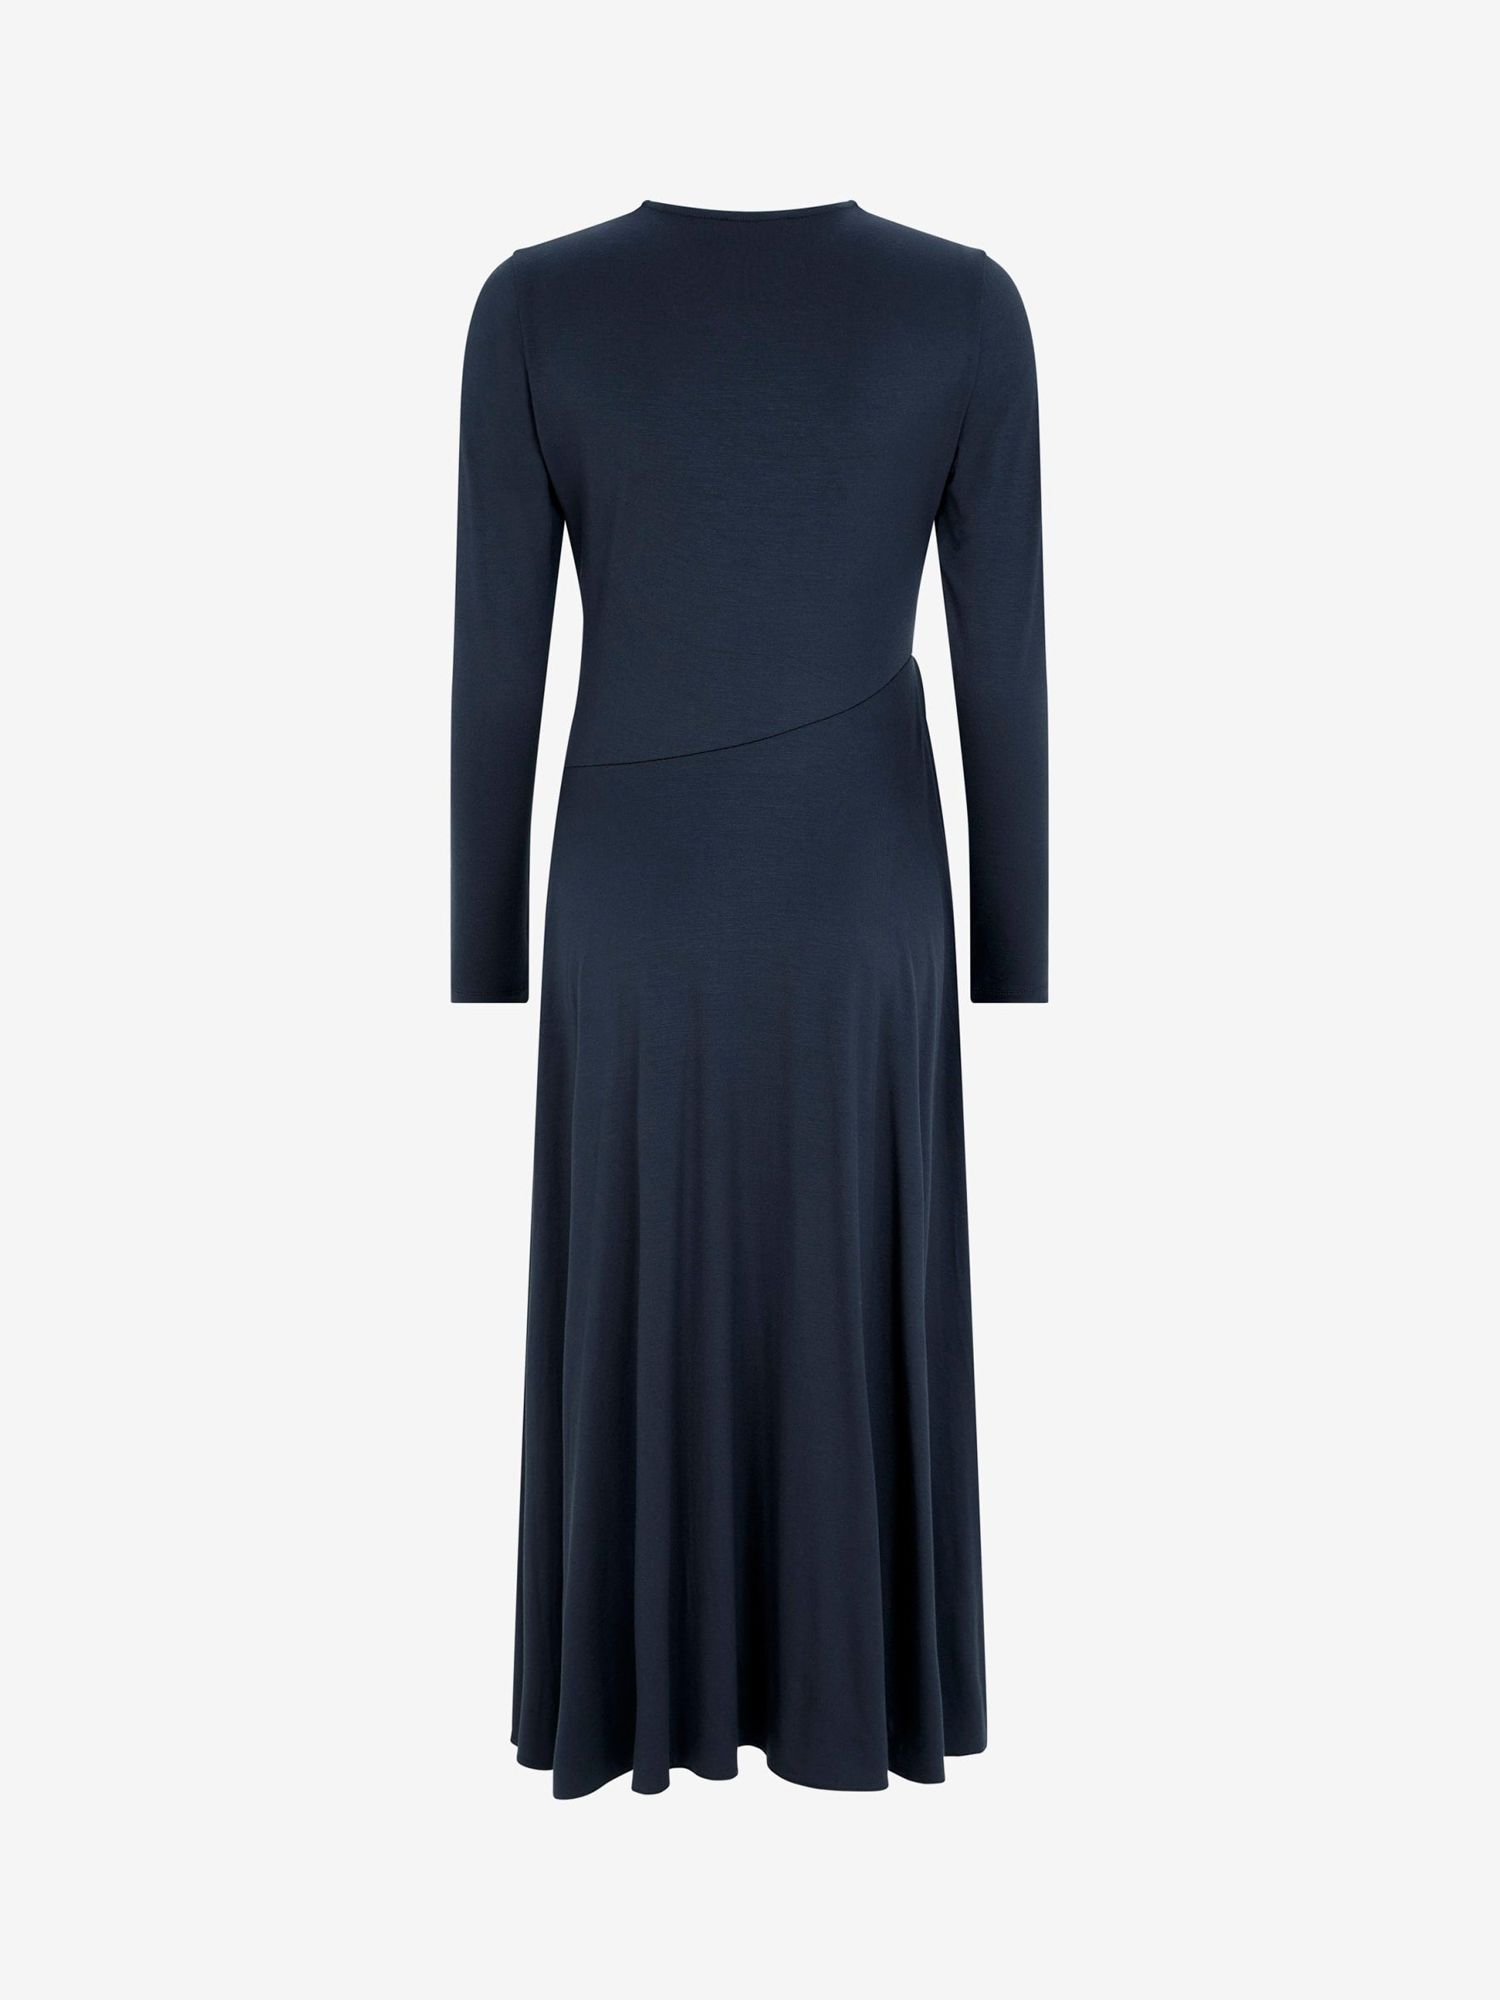 Mint Velvet Jersey Midi Dress, Dark Blue, L